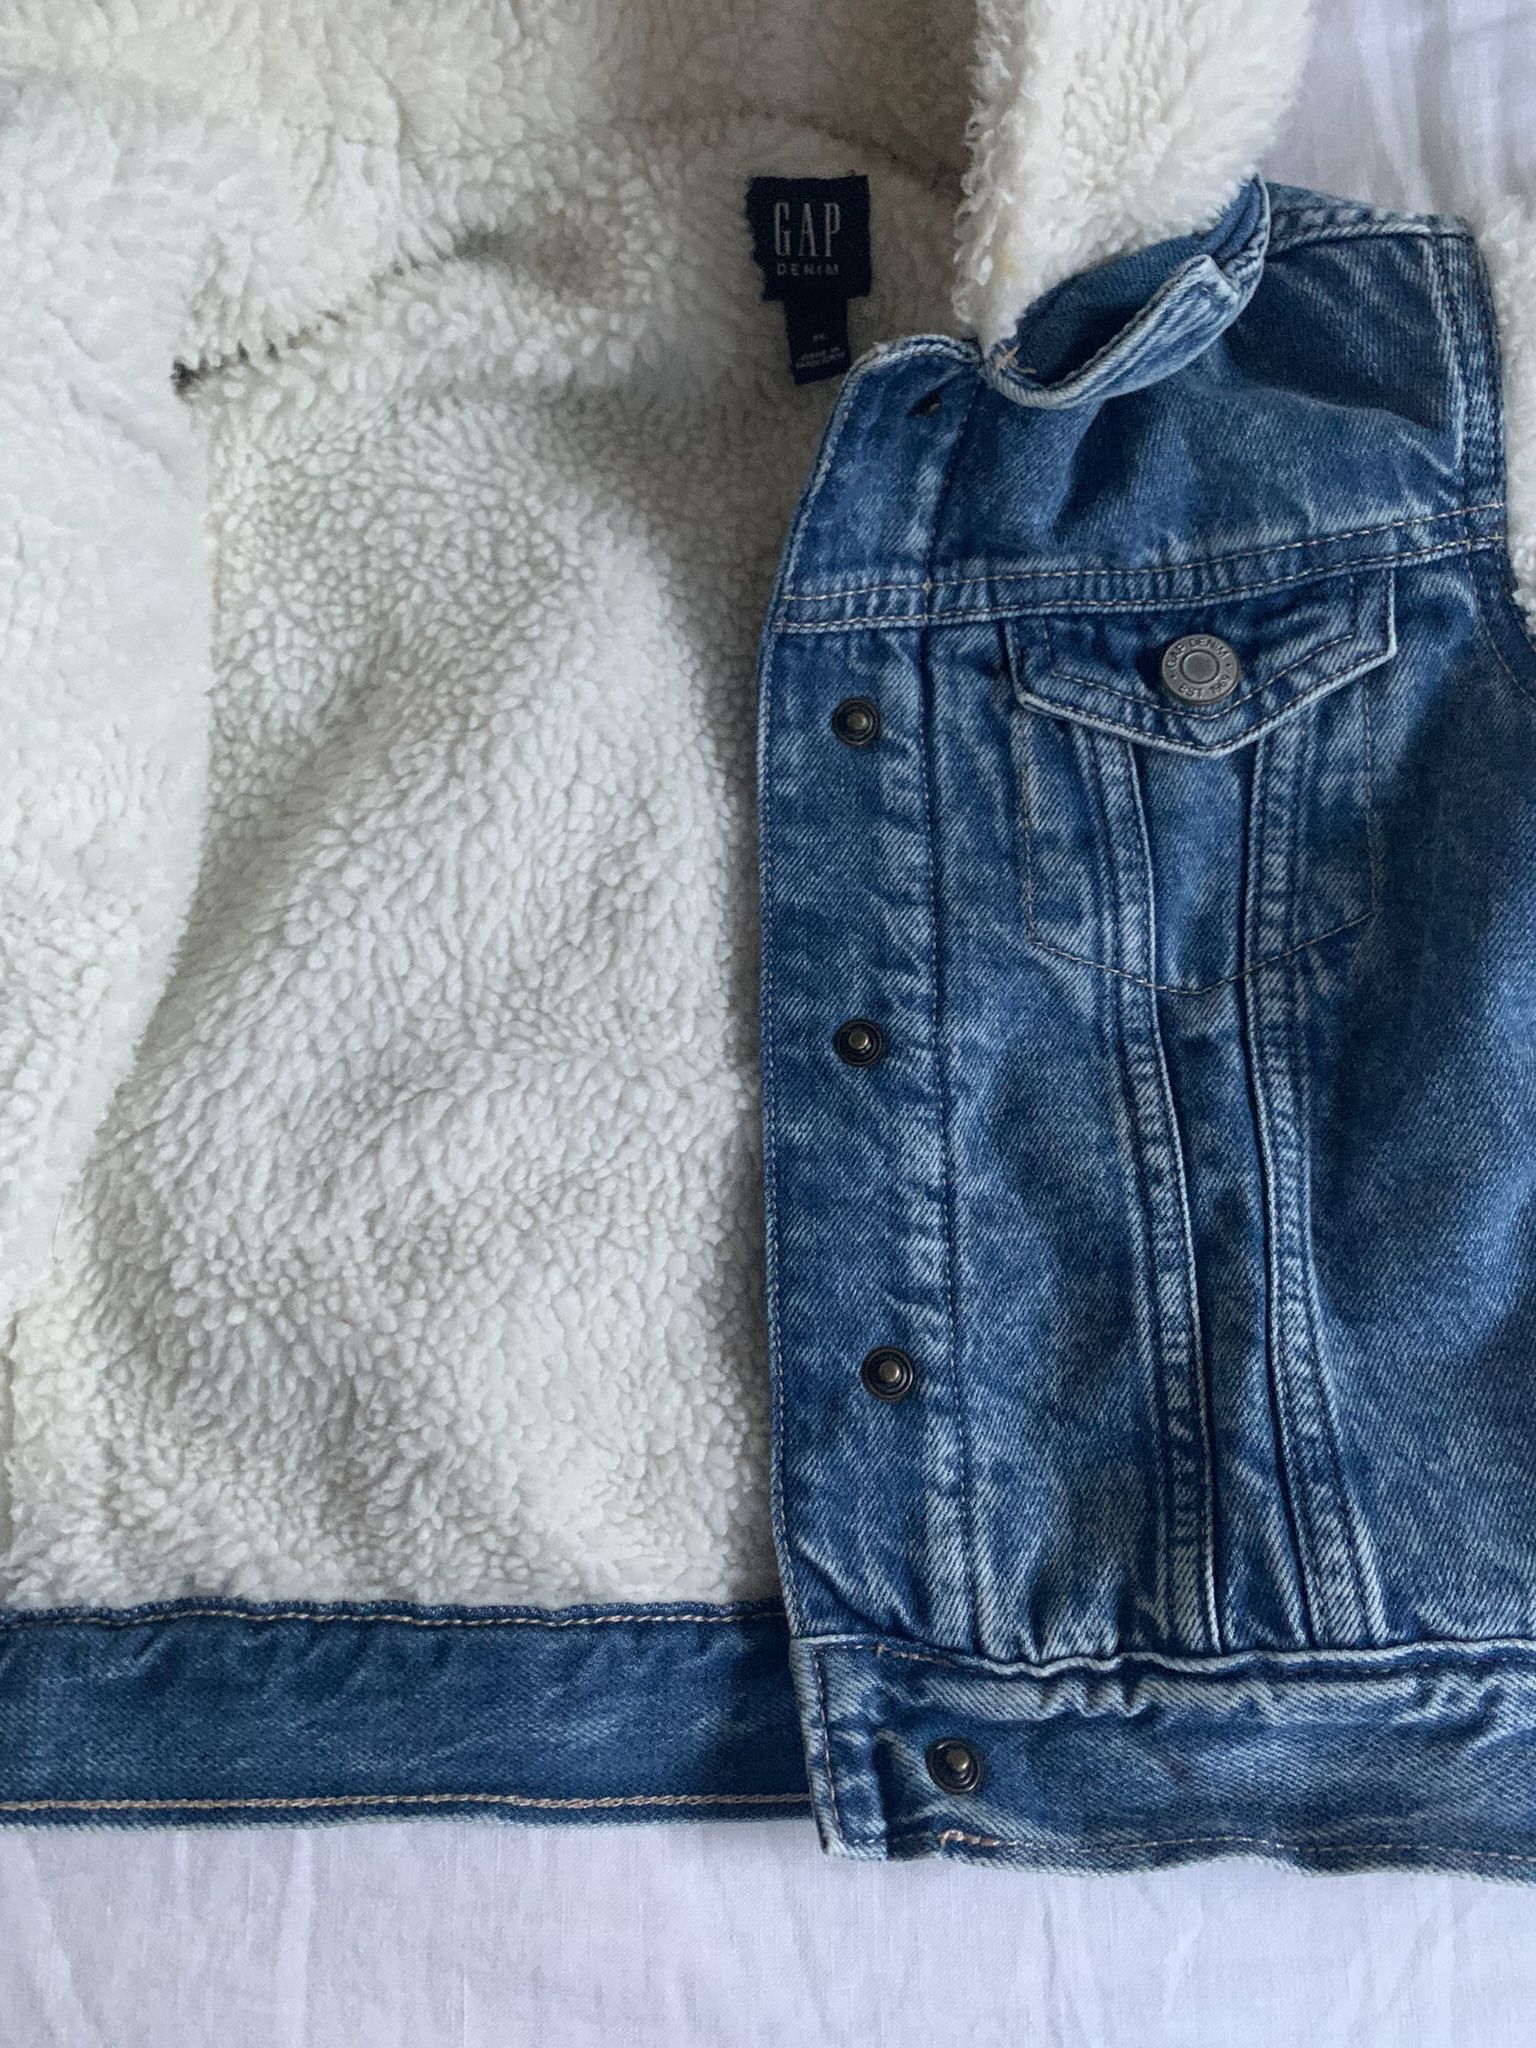 Brand New W/ Tags Toddler Gap Warm Jean Jacket Size 4-5